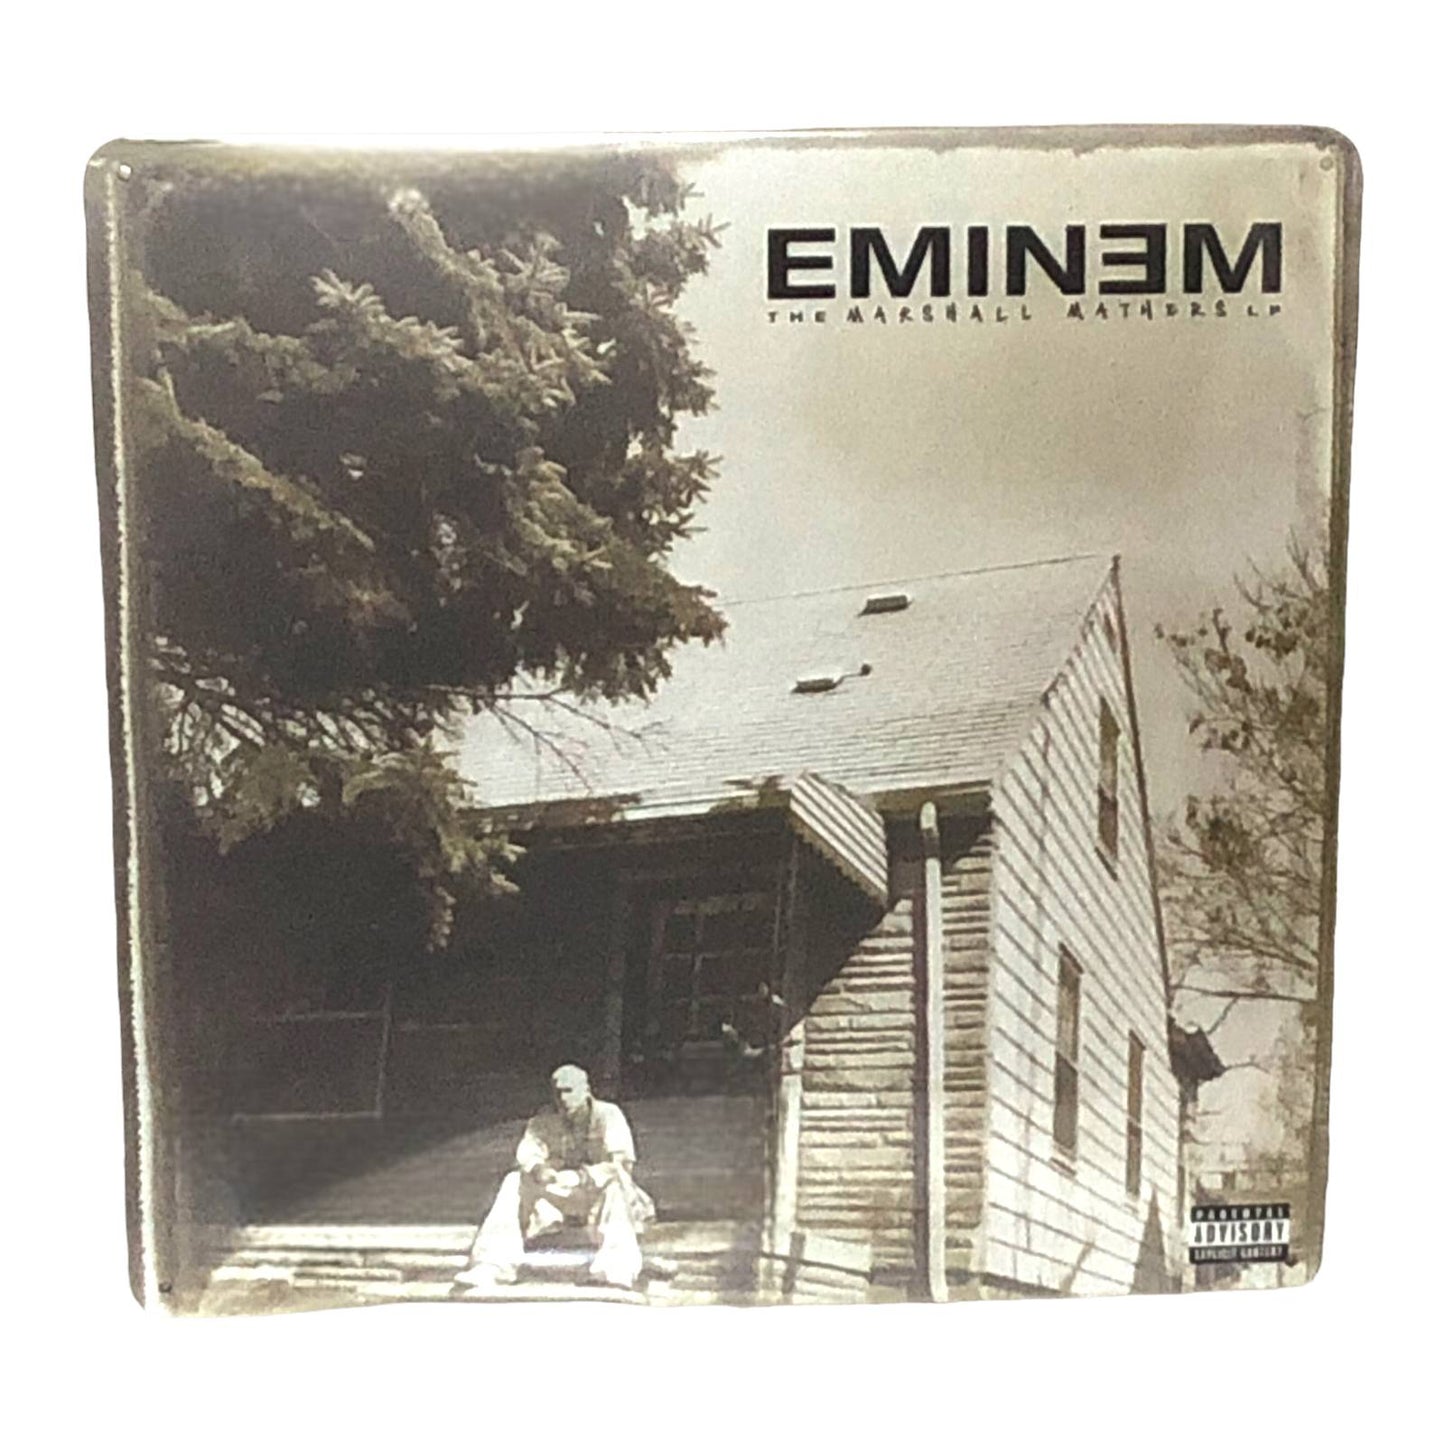 Eminem - The Marshall Mathers LP Album Cover Metal Print Tin Sign 12"x 12"